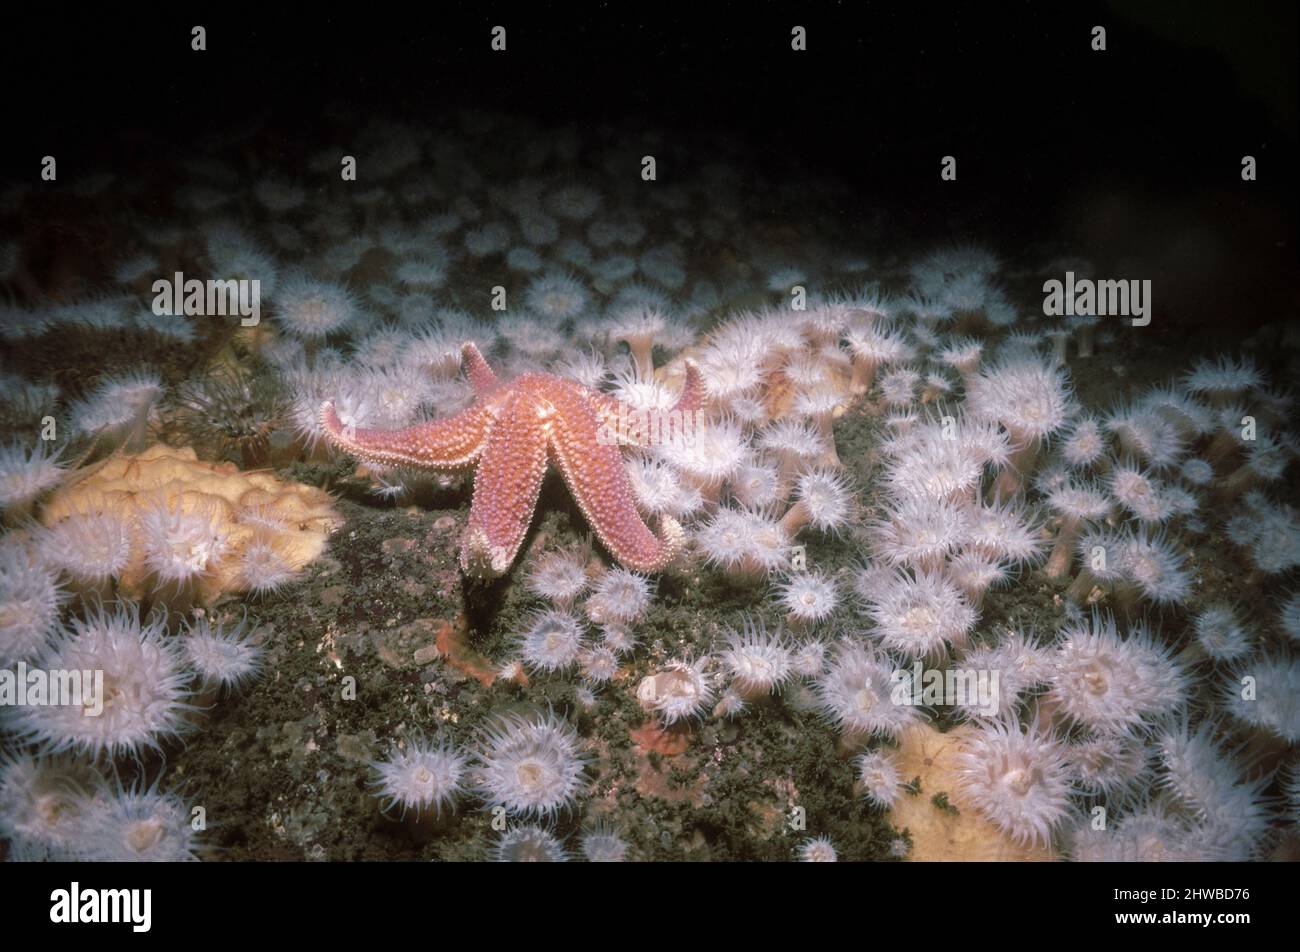 Common starfish (Asterias rubens) amongst a bed of sea anemones, UK. Stock Photo